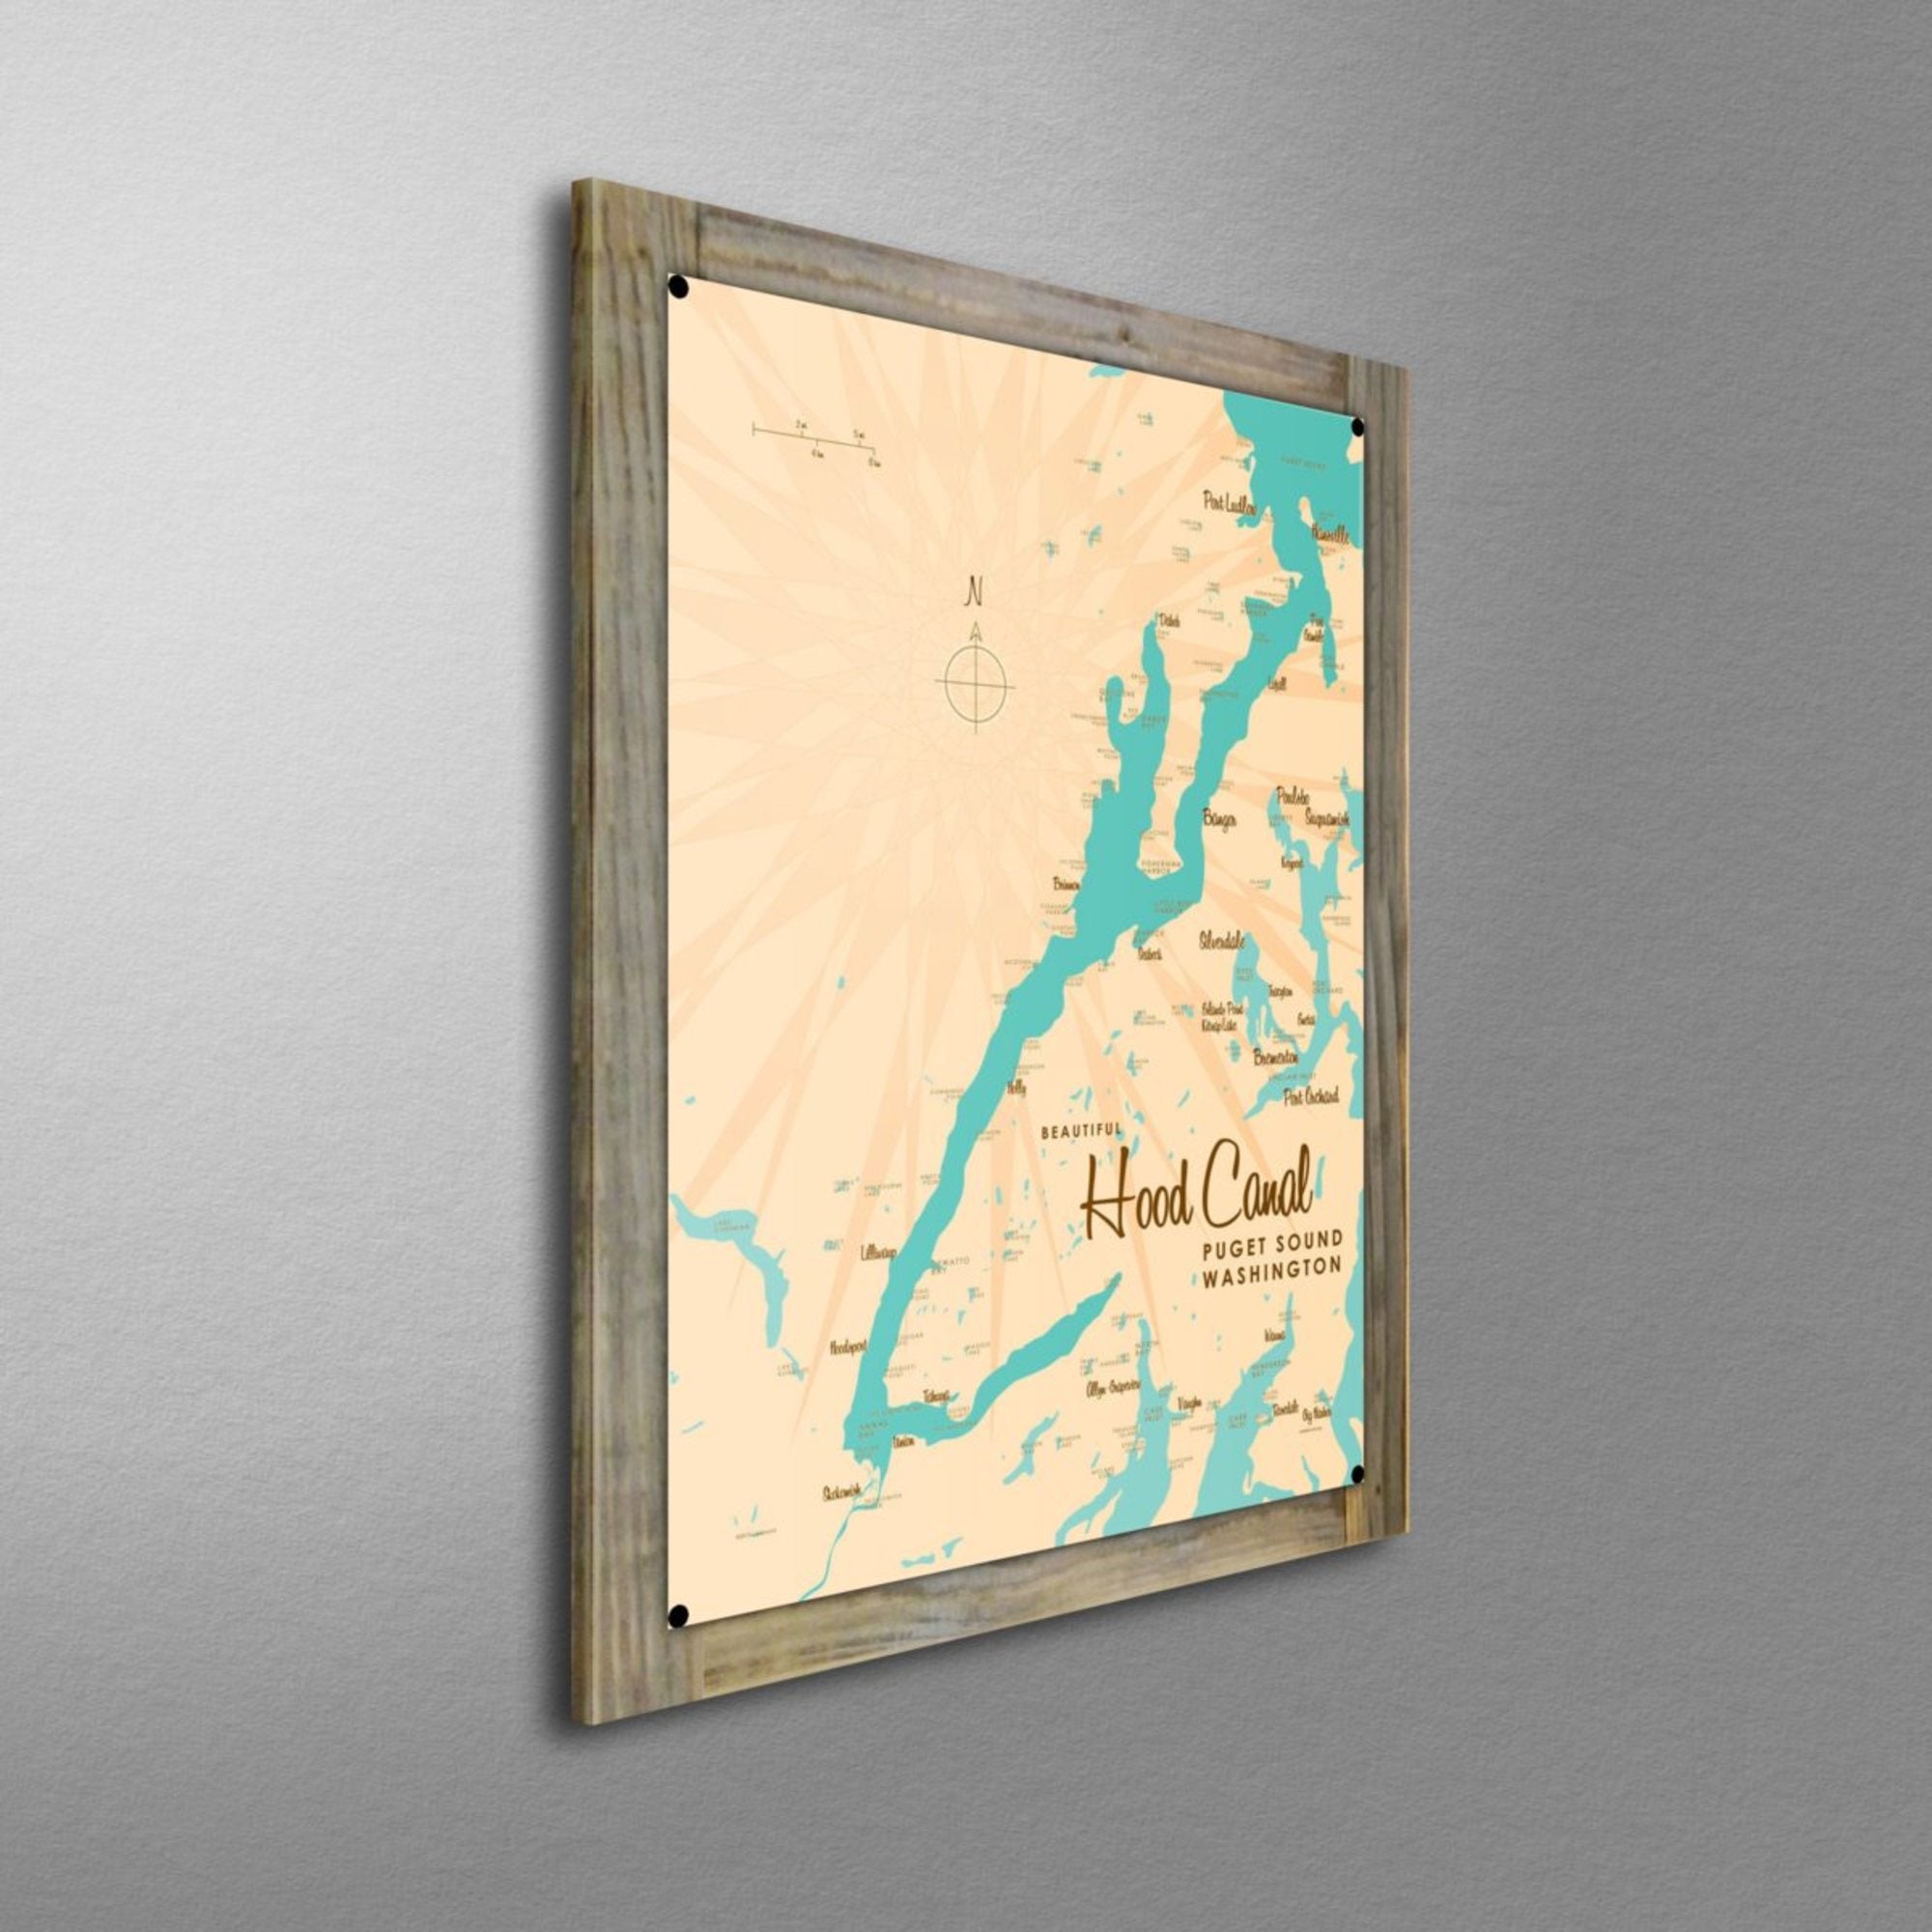 Hood Canal Washington, Wood-Mounted Metal Sign Map Art